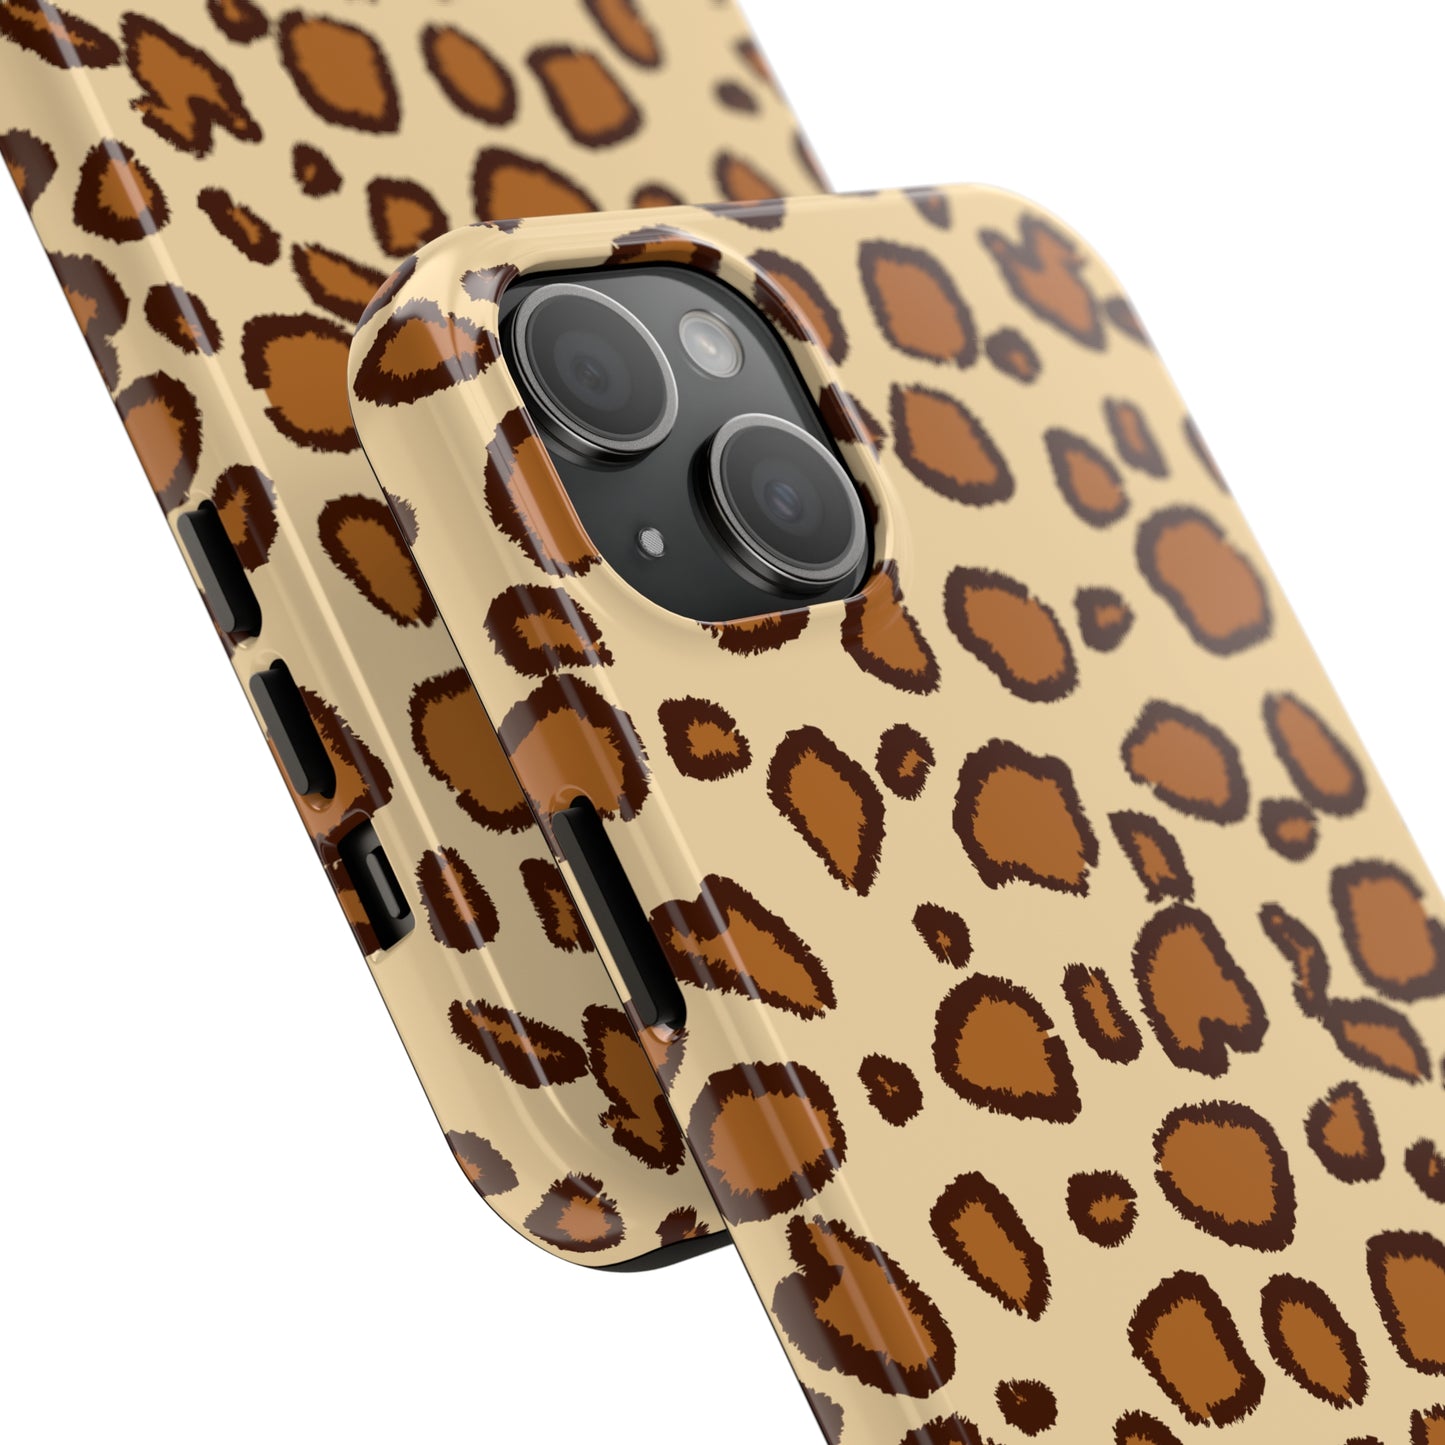 Persian Leopard Tough iPhone Case